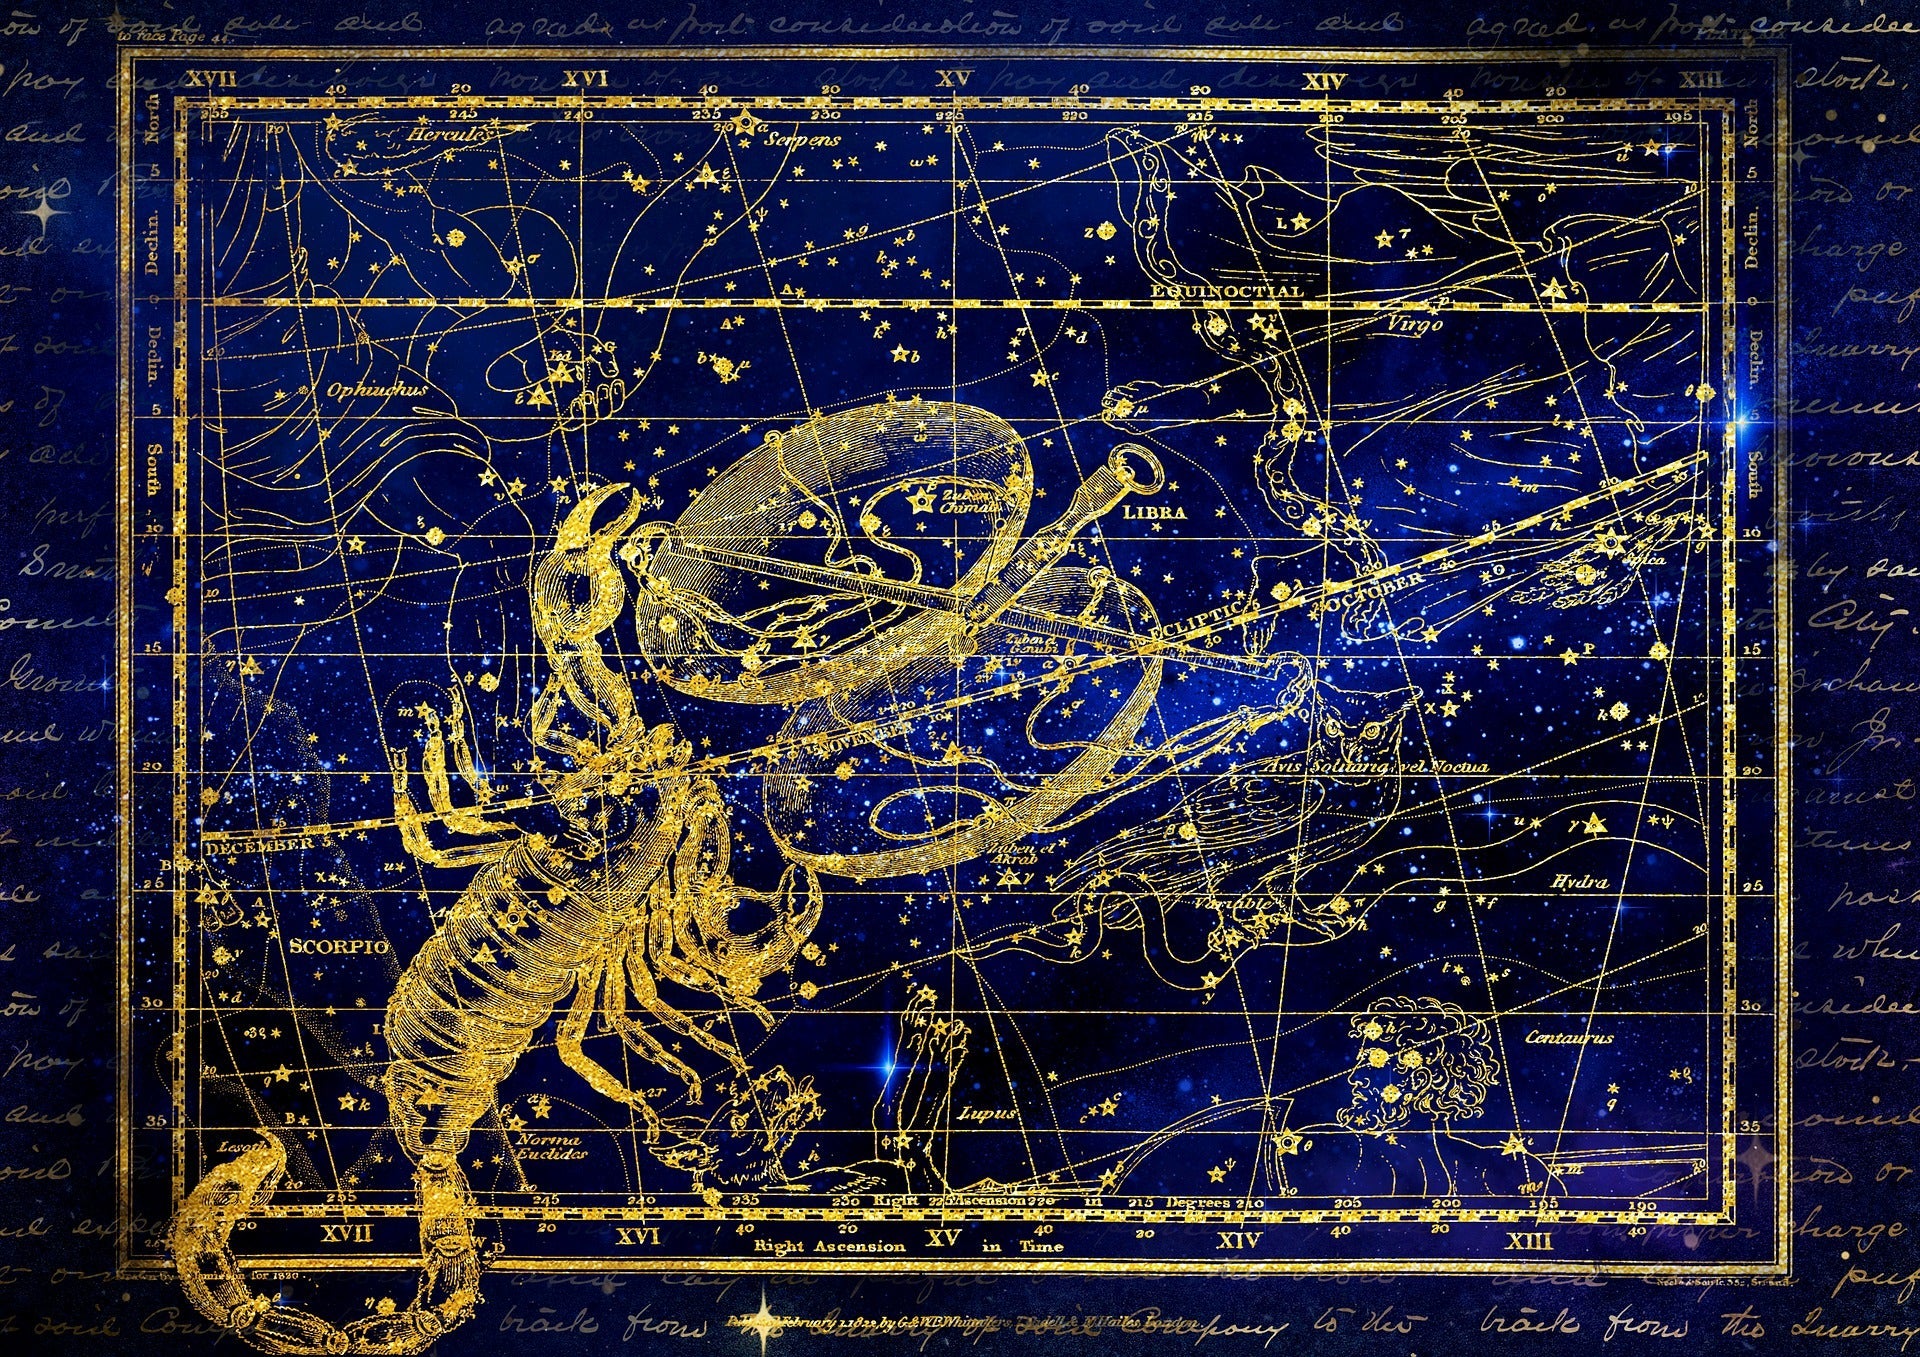 Scorpio and Libra Constellations